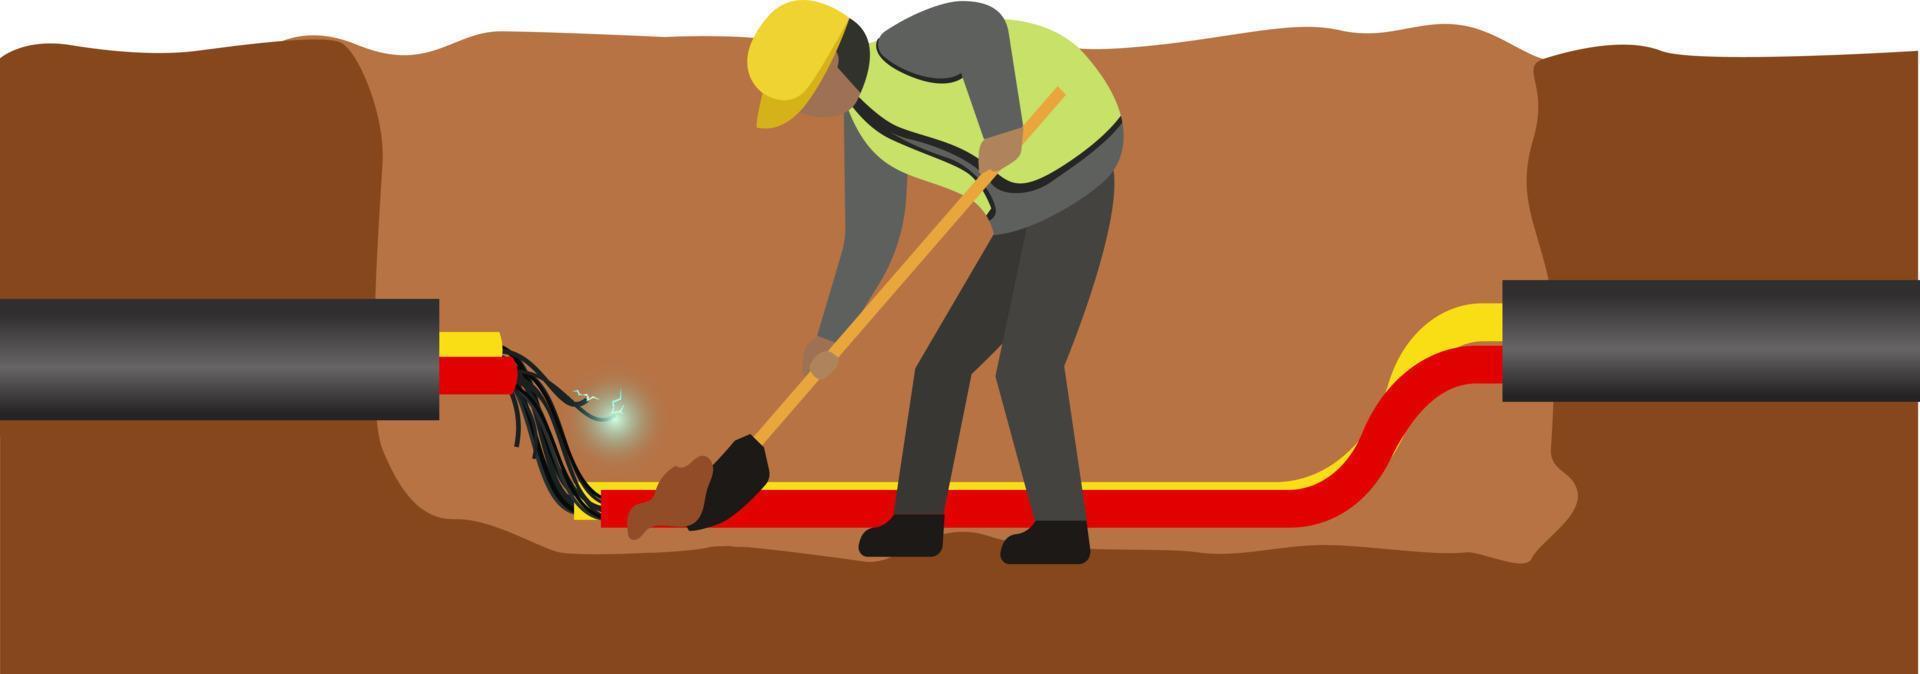 Construction worker, Repairing broken wire pipe on concrete soil vector